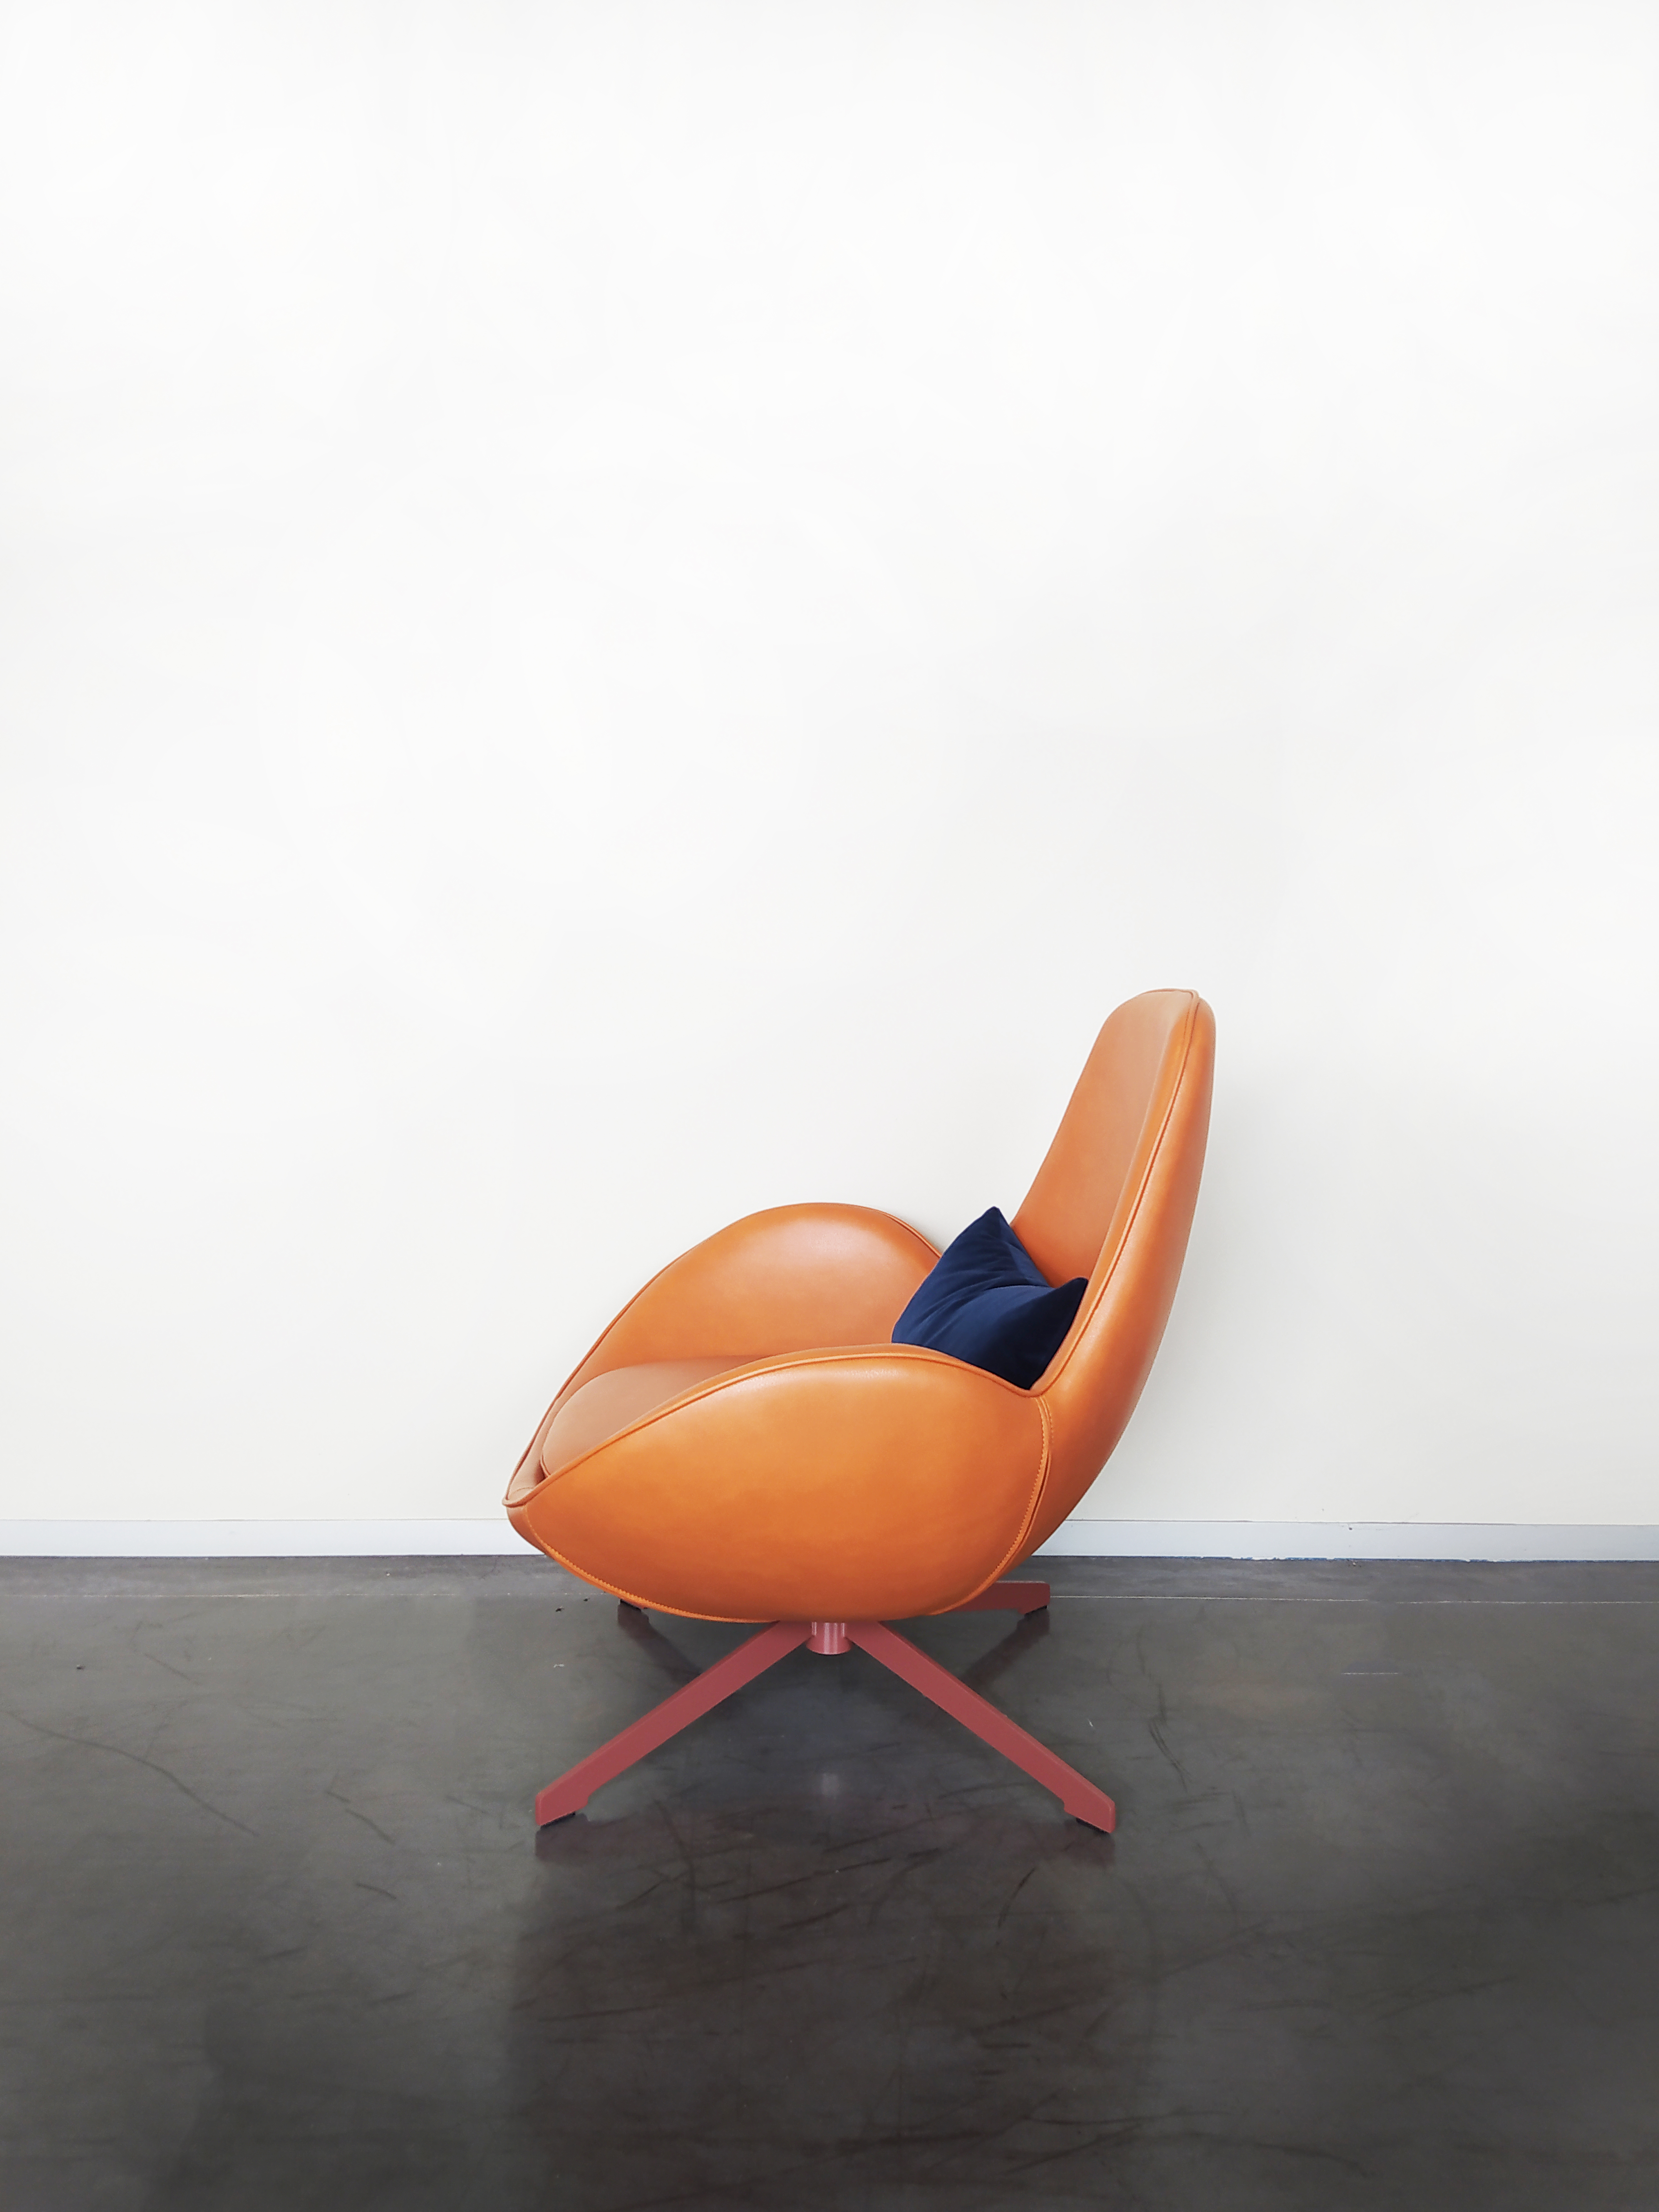 Evolution-hasselt-interieurwinkel-meubelen-design-leder-fauteuil-otto-zijaanzicht